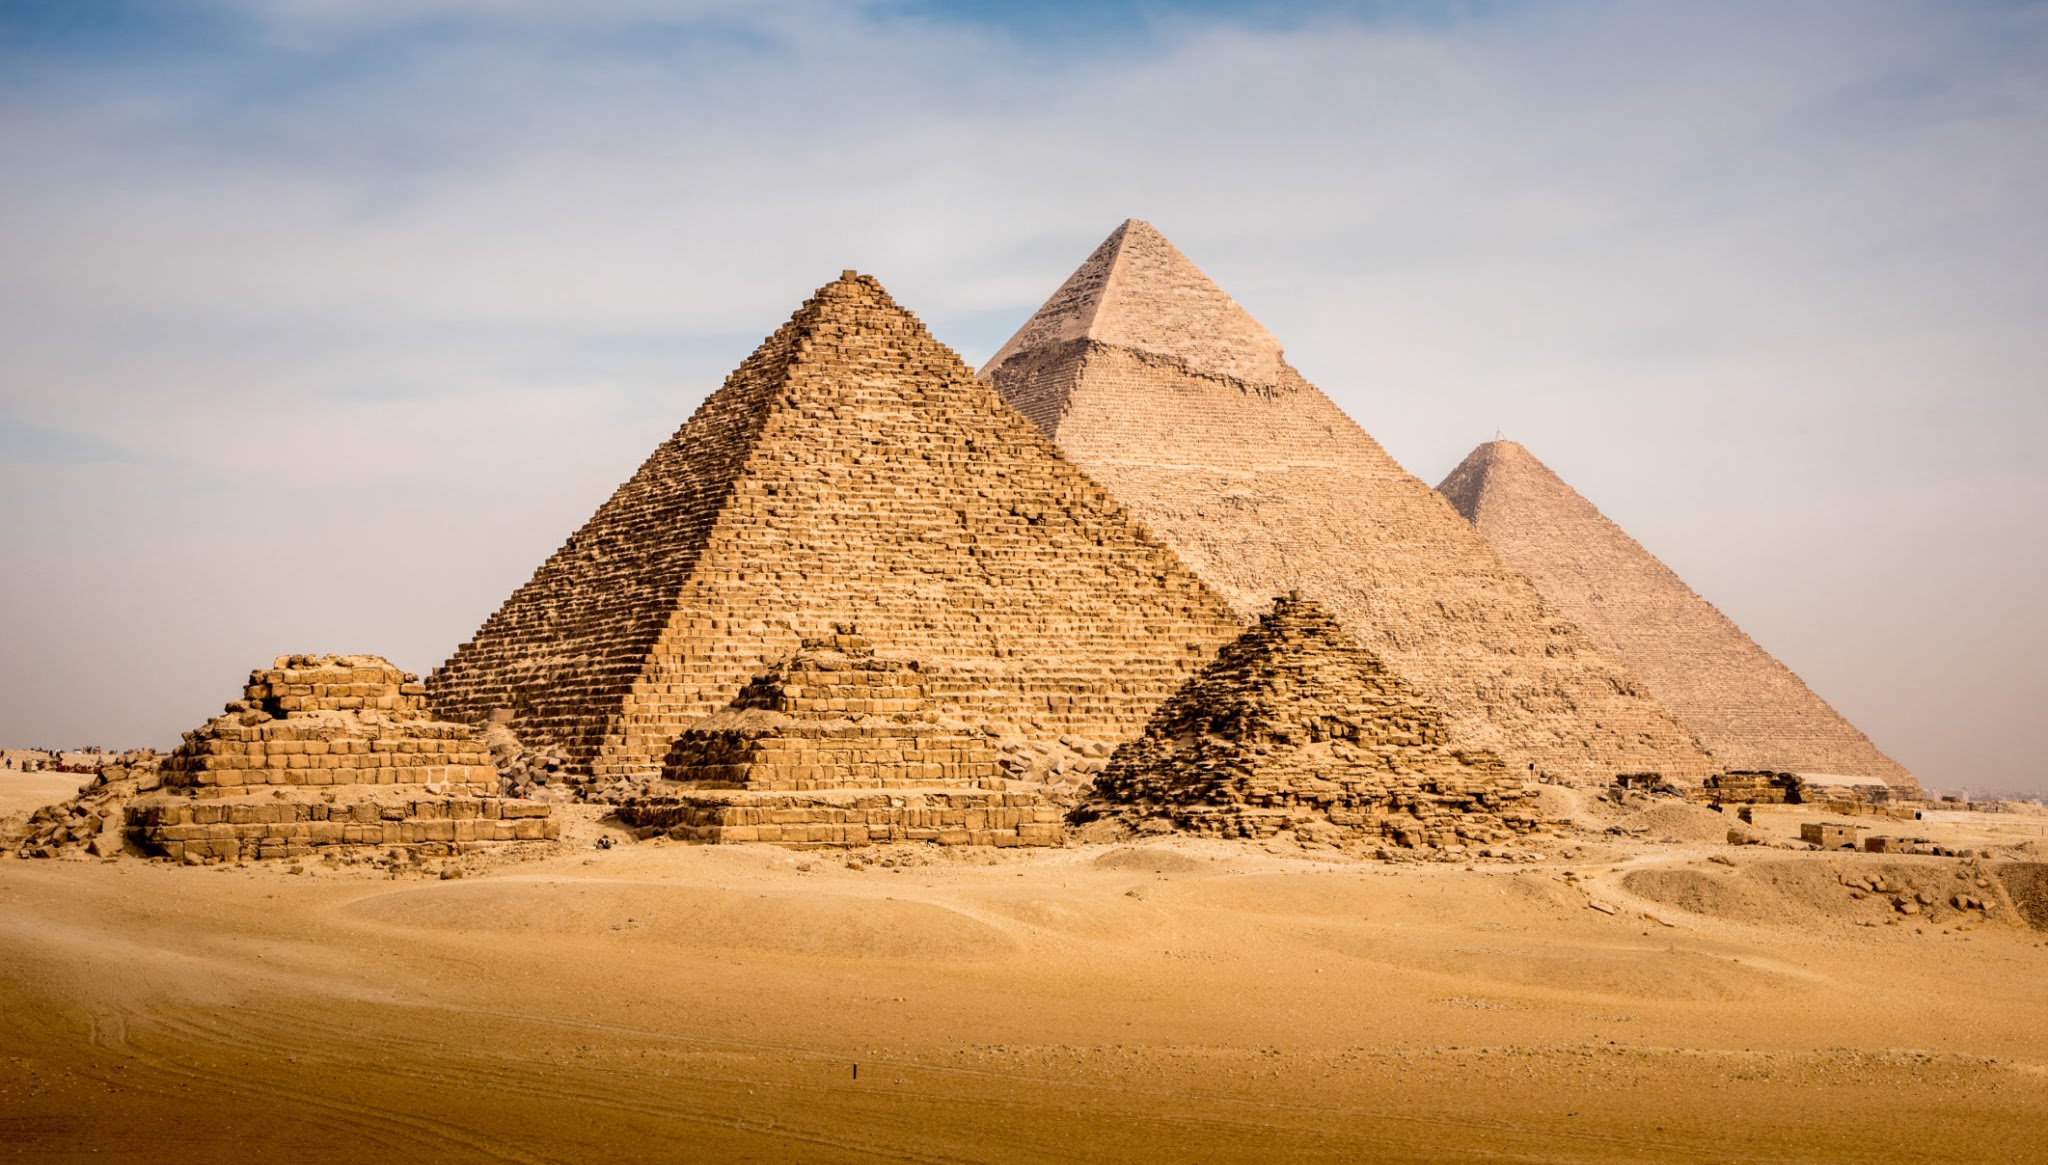 General 2048x1165 pyramid Egypt Pyramids of Giza sand history ancient landmark World Heritage Site Africa